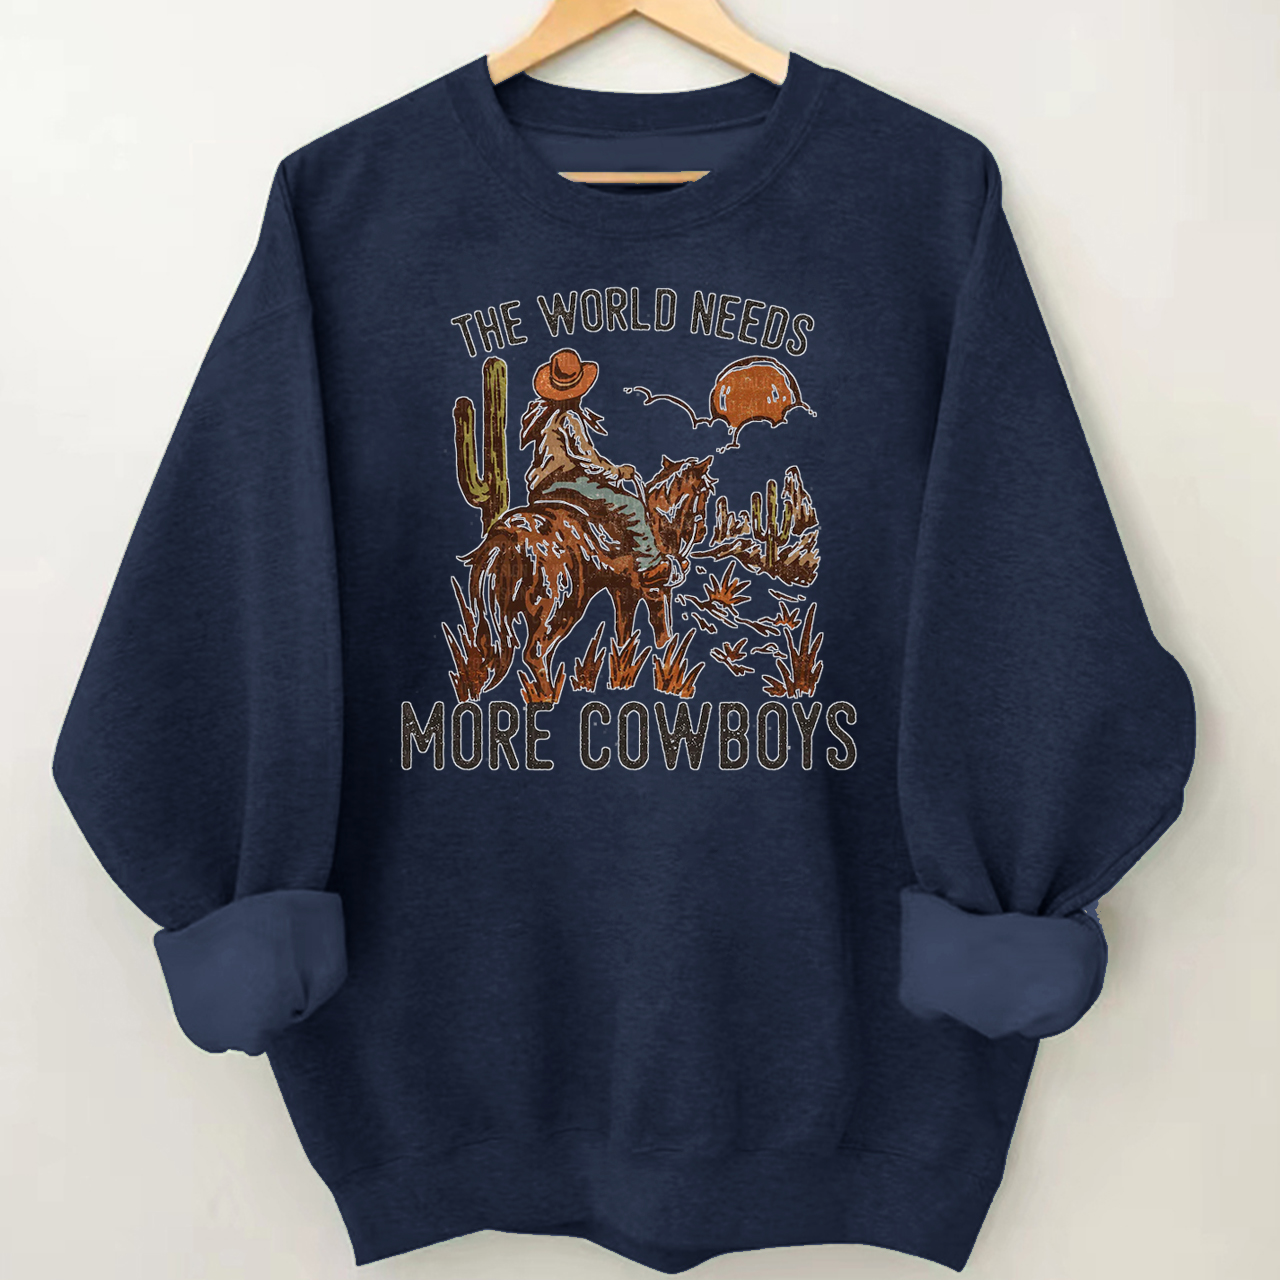 The World Needs More Cowboys Crewneck Sweatshirt